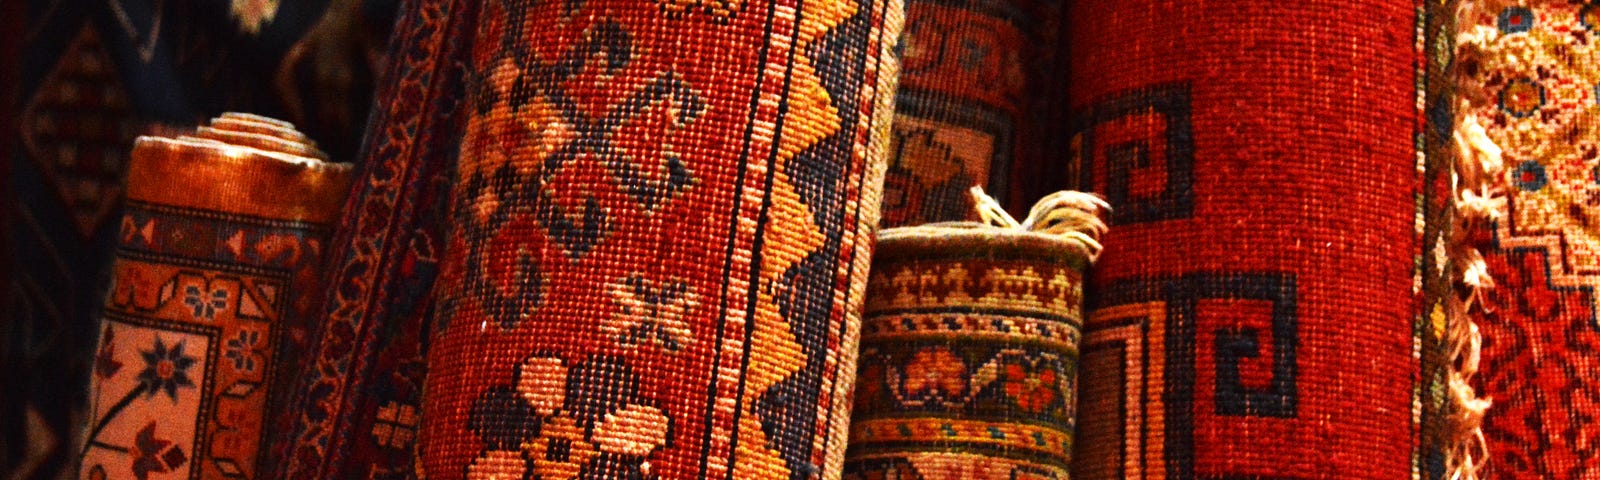 close up of persian rugs